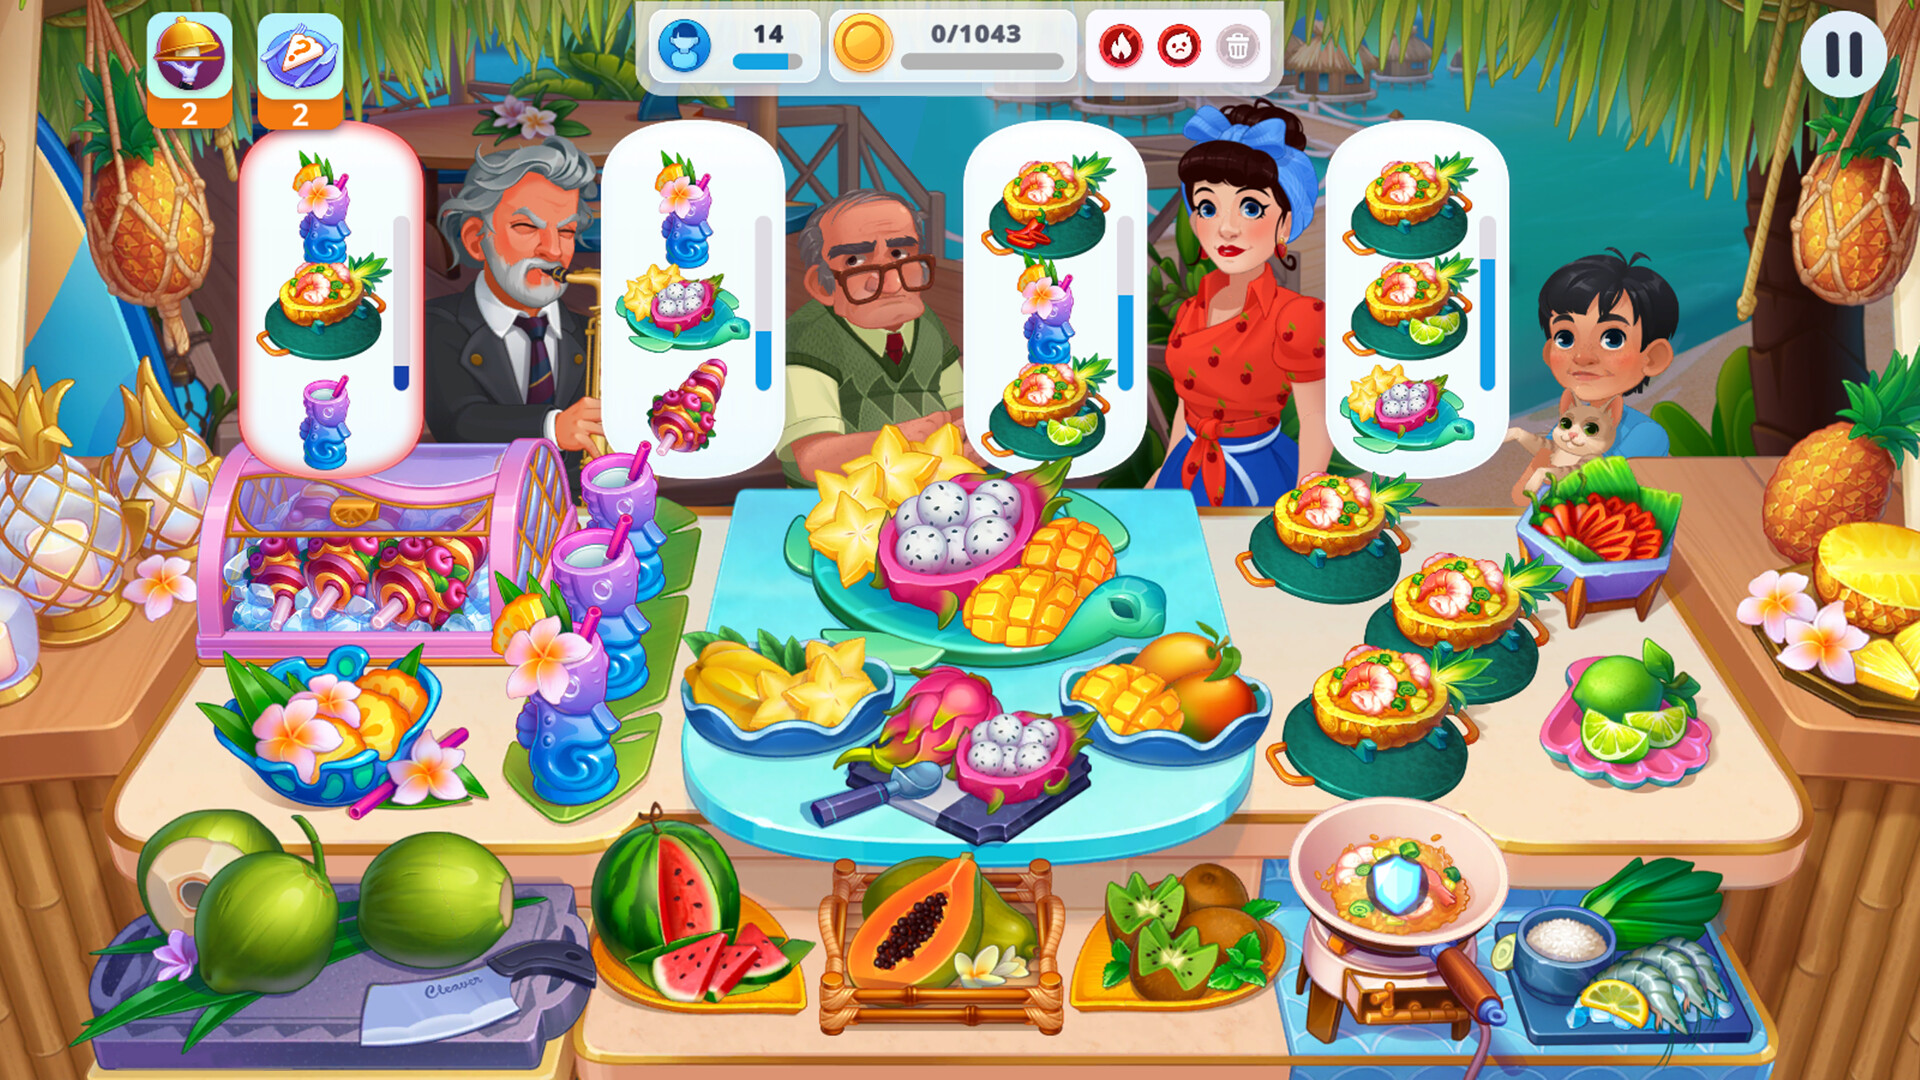 Turkey Cooking Simulator - free online game